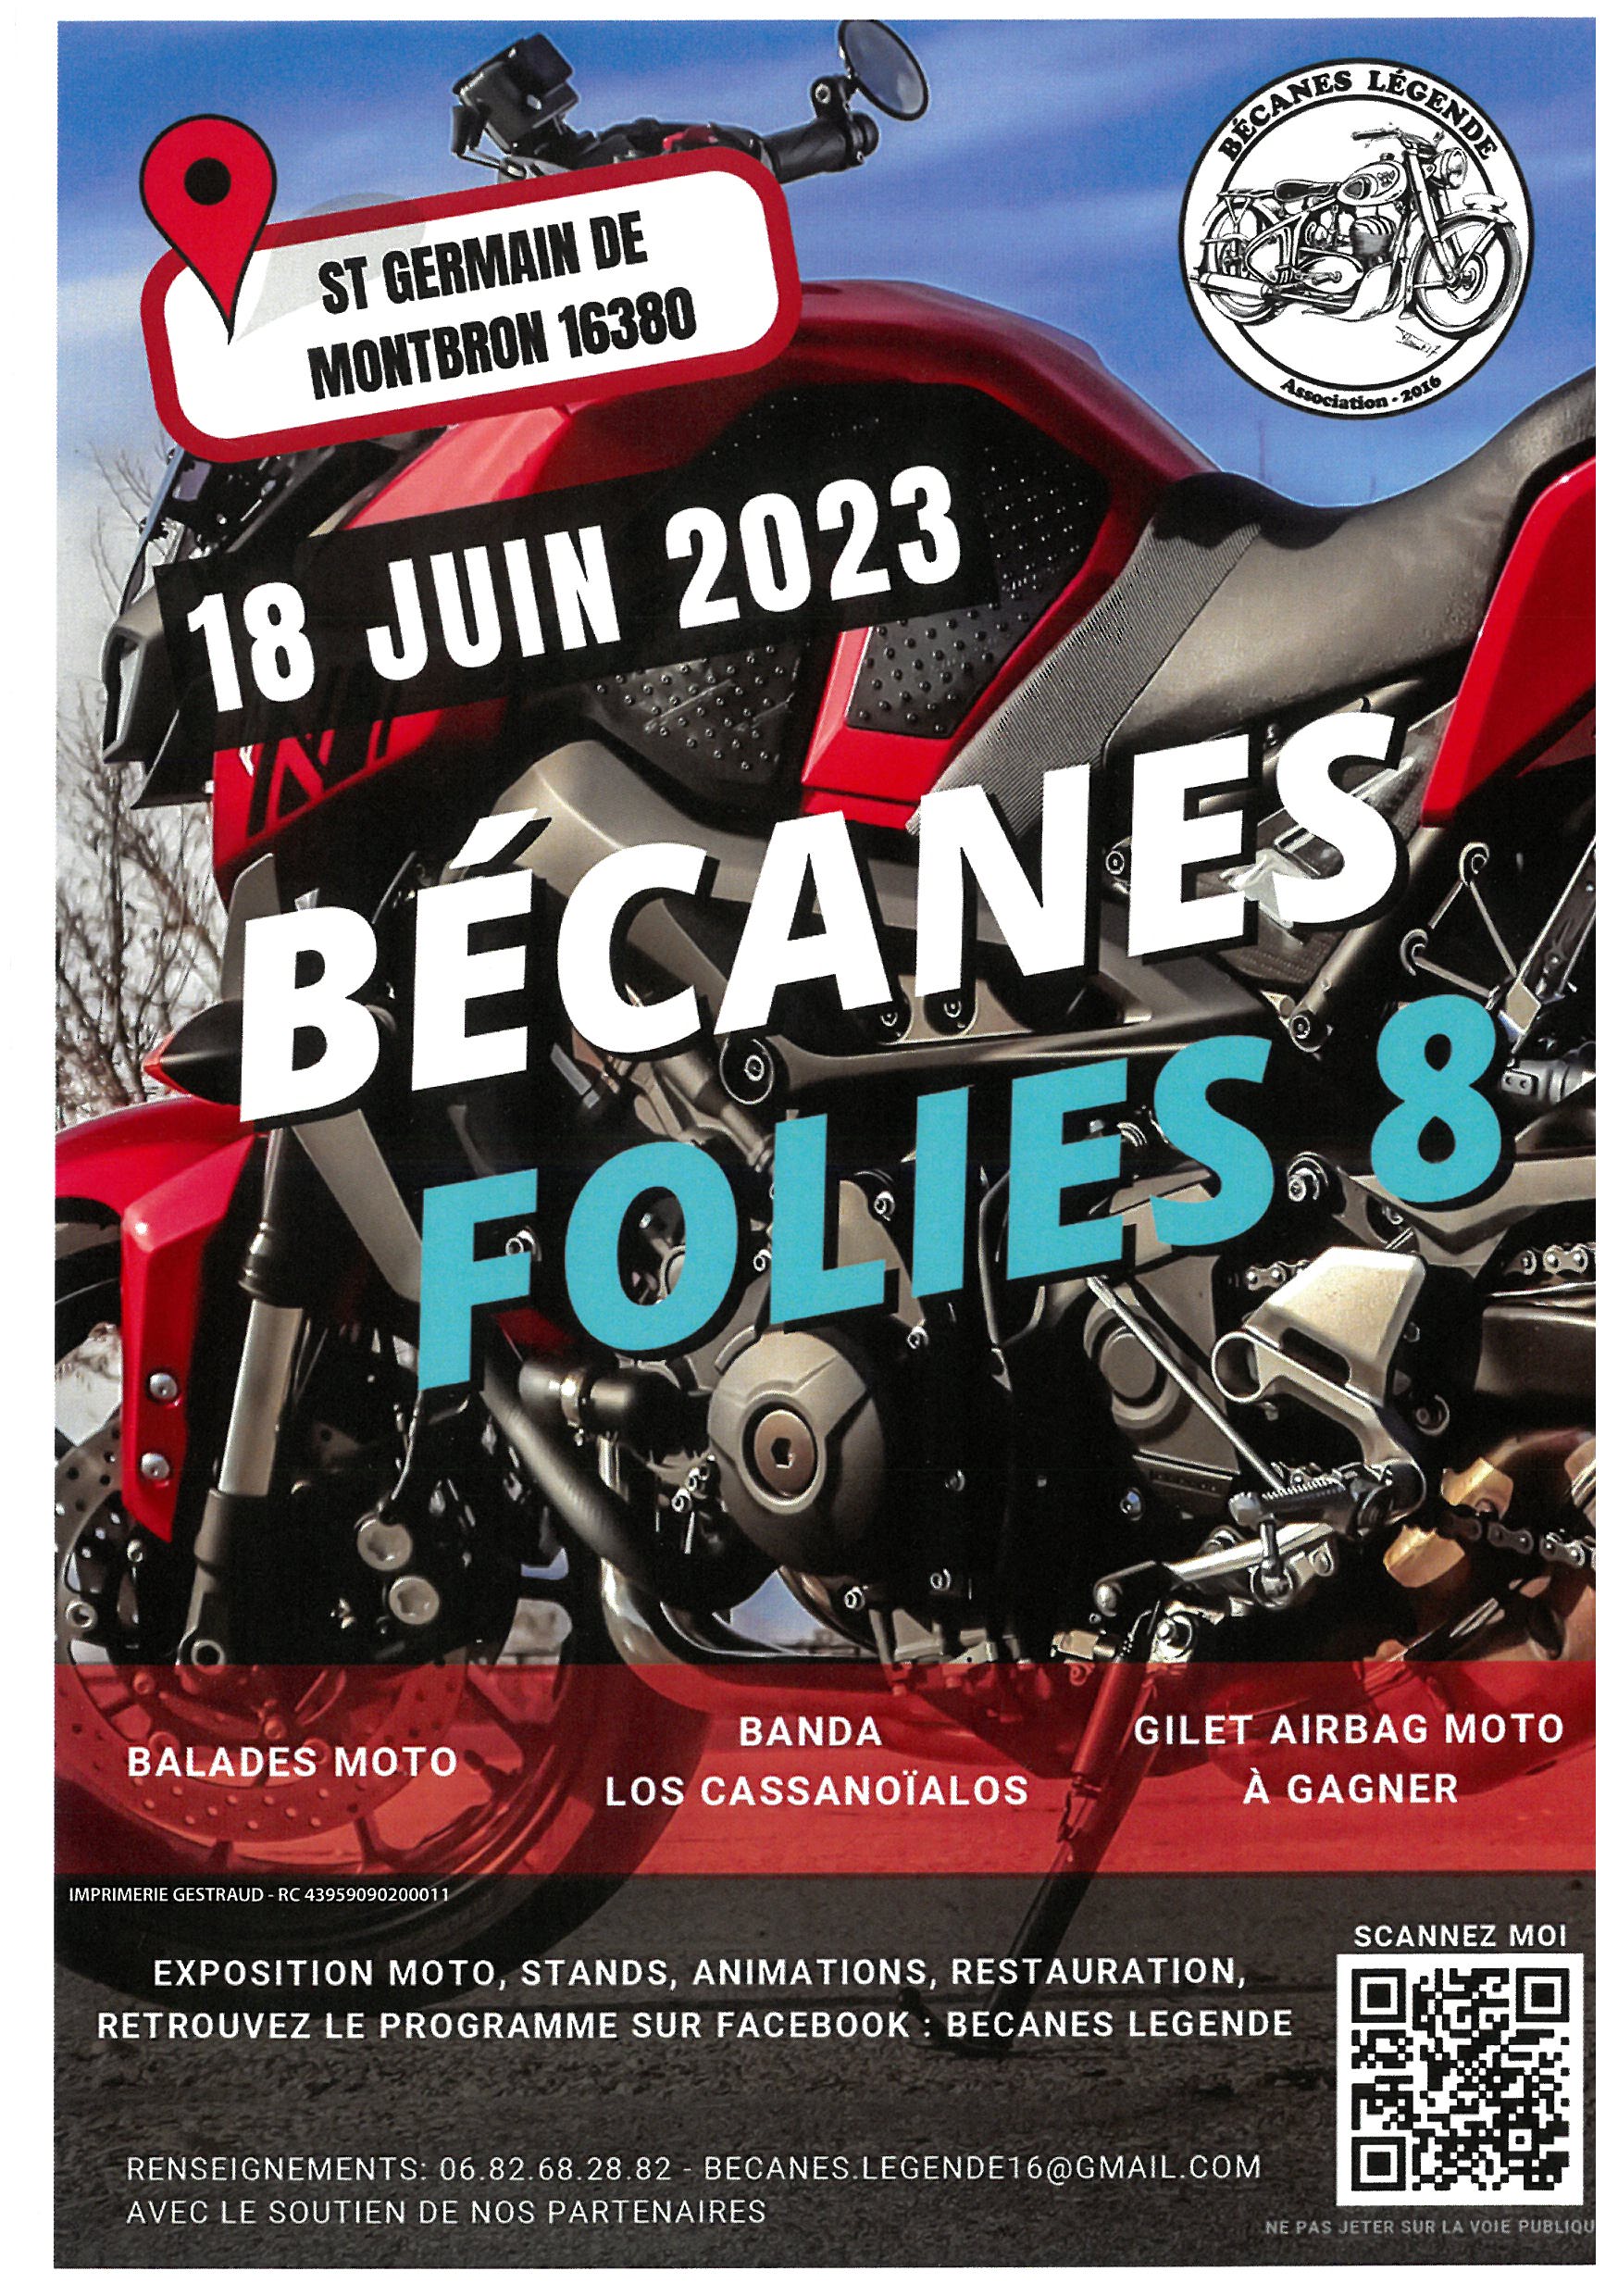 Bécanes Folies exposition motos Saint Germain de Montbron 18 juin 2023